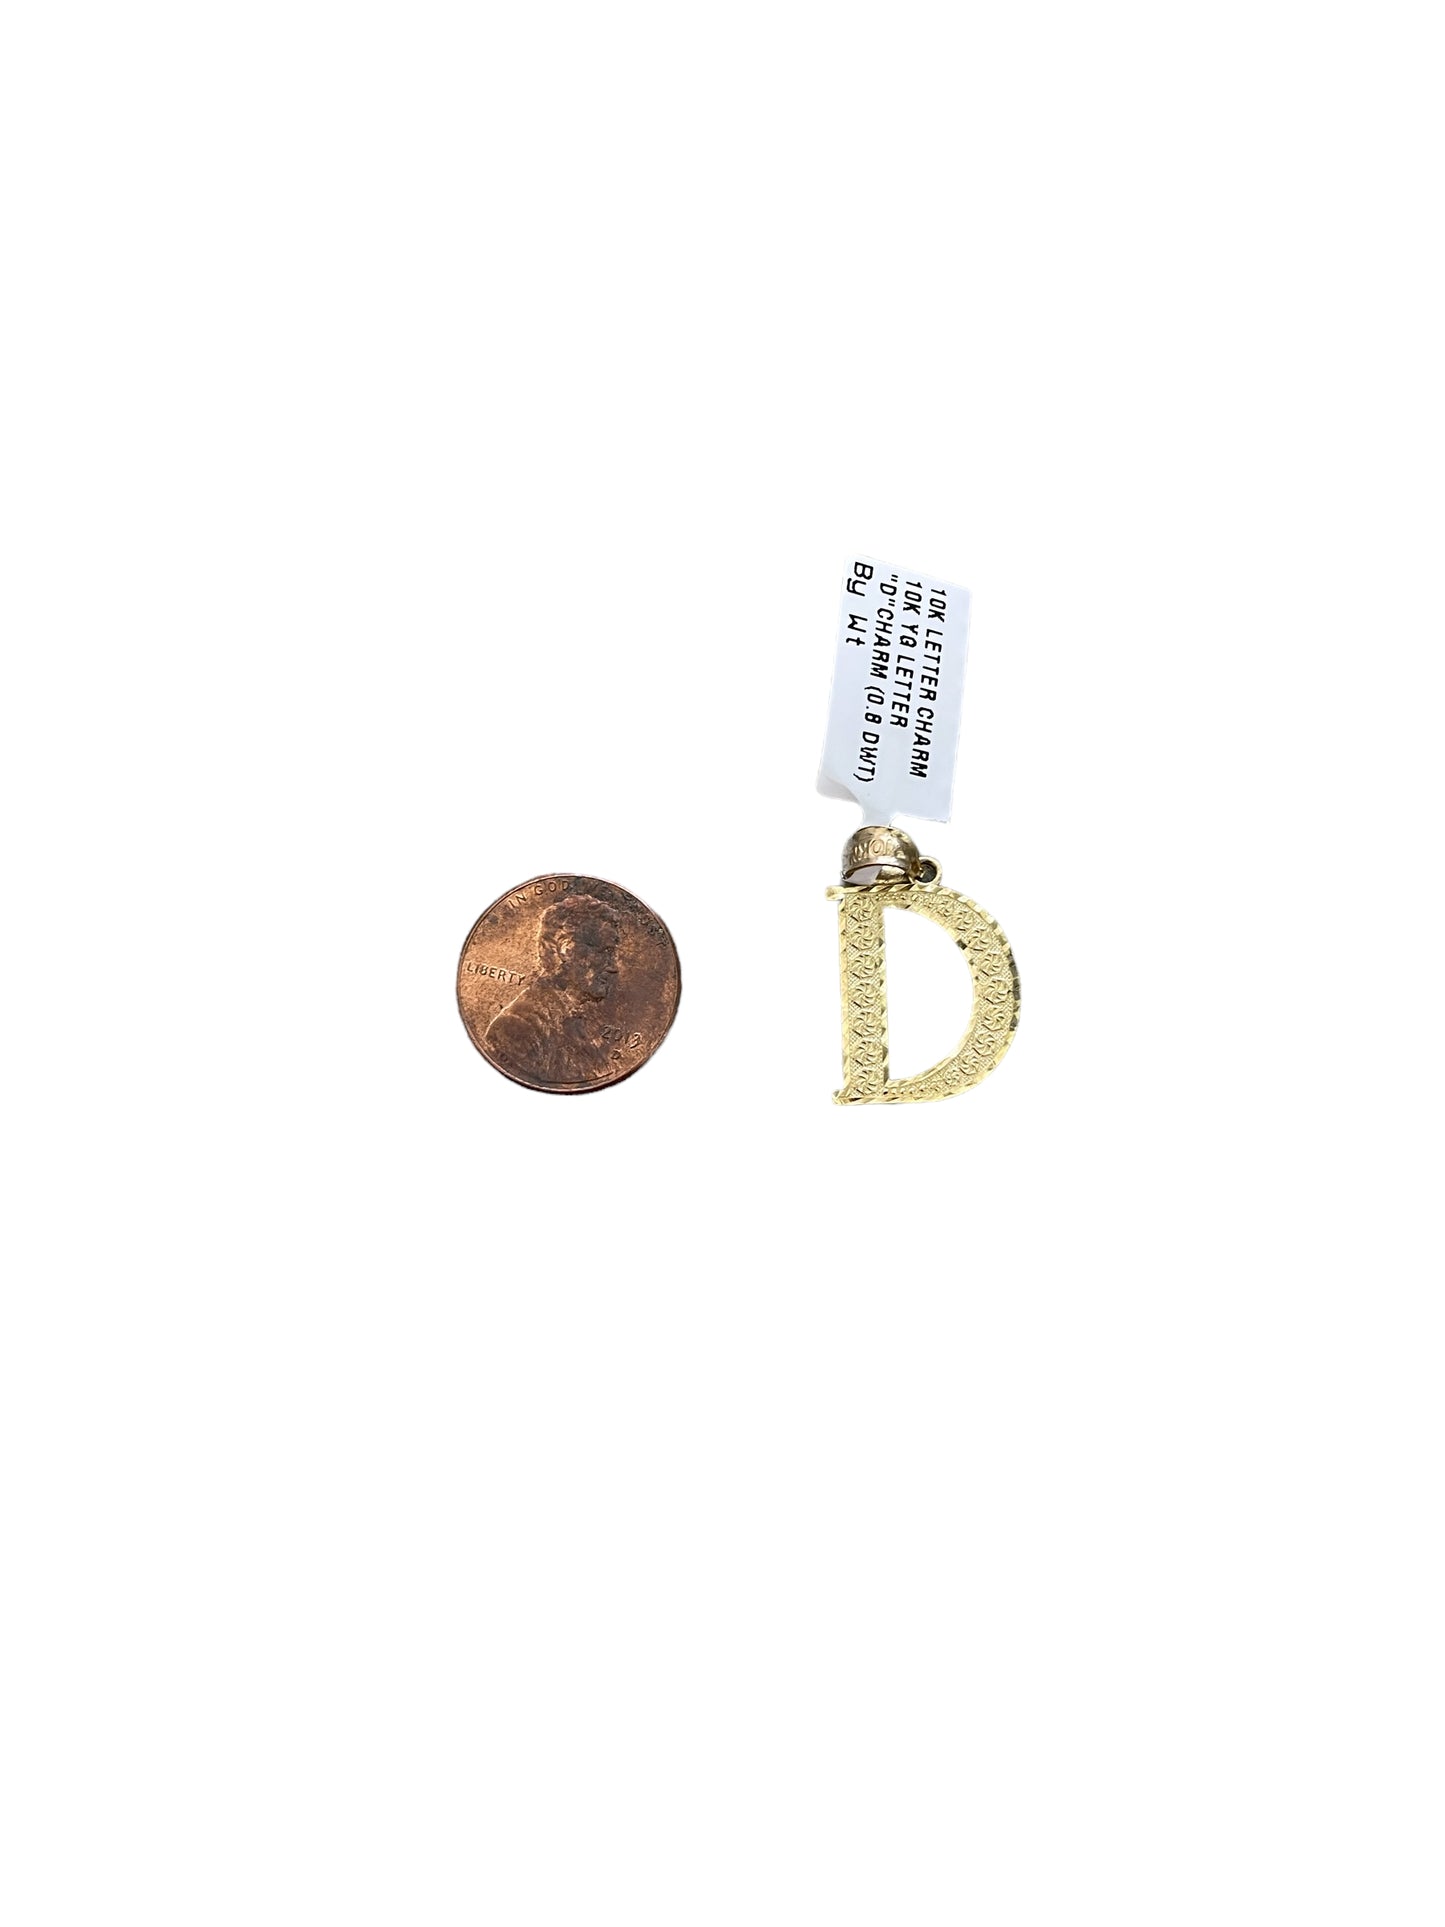 10K Yellow Gold Letter "D" Charm (1.3 Grams)